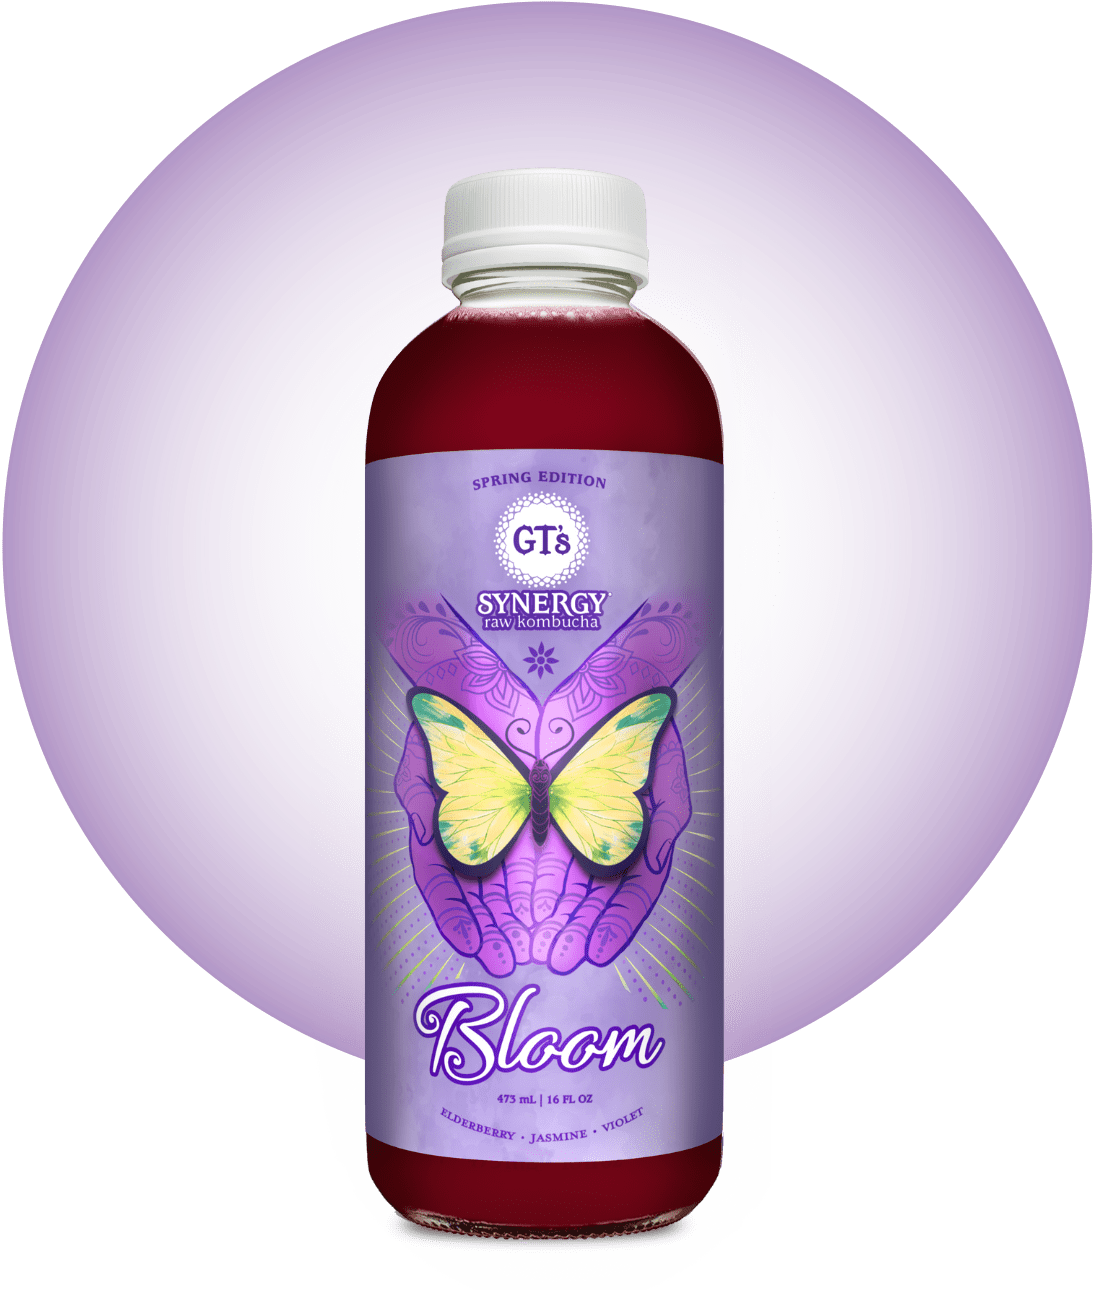 GT's Bloom SYNERGY Raw Kombucha Bottle